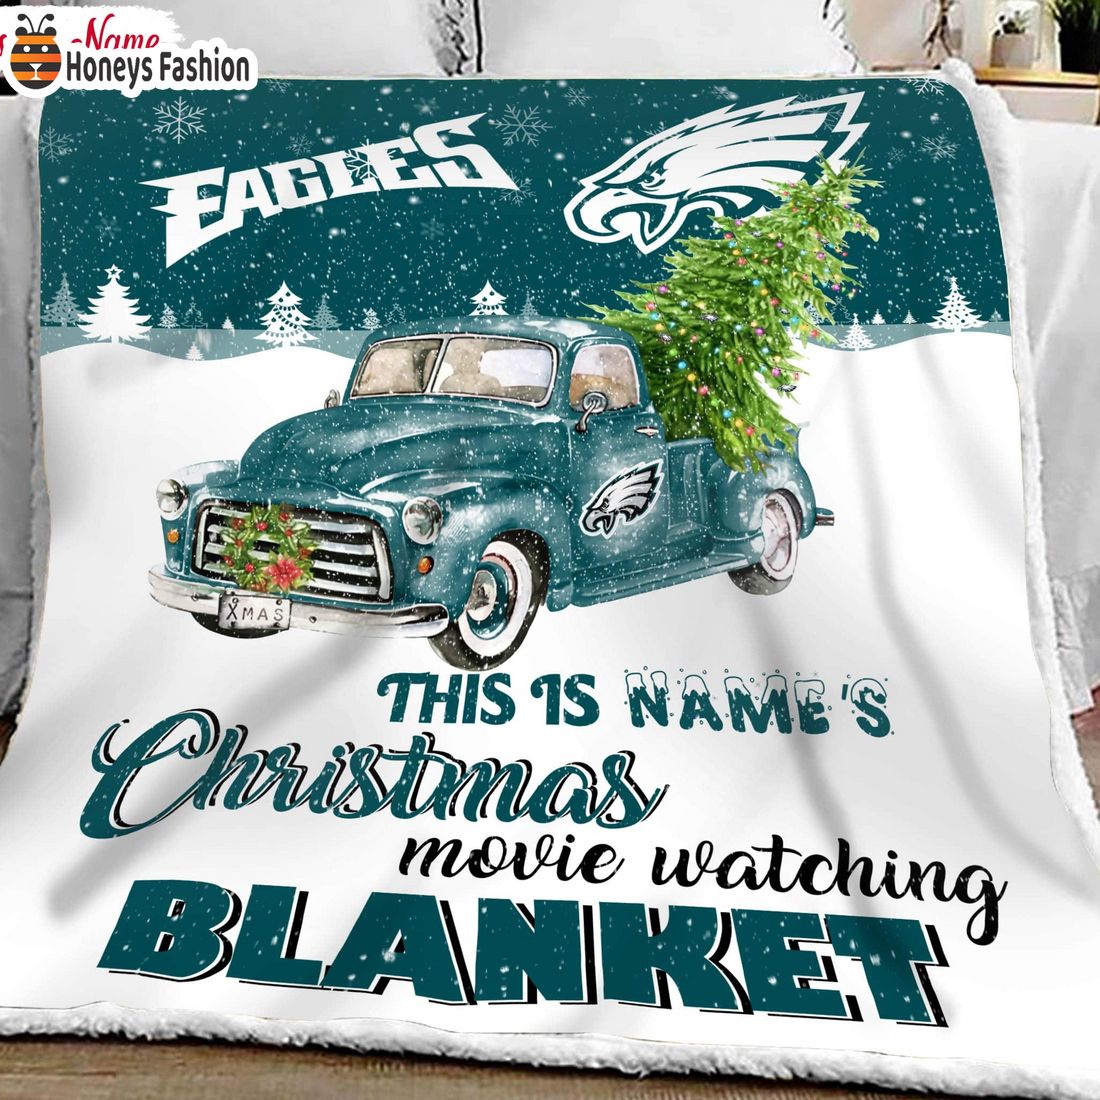 NFL Philadelphia Eagles Custom Name Christmas movie watching quilt blanket